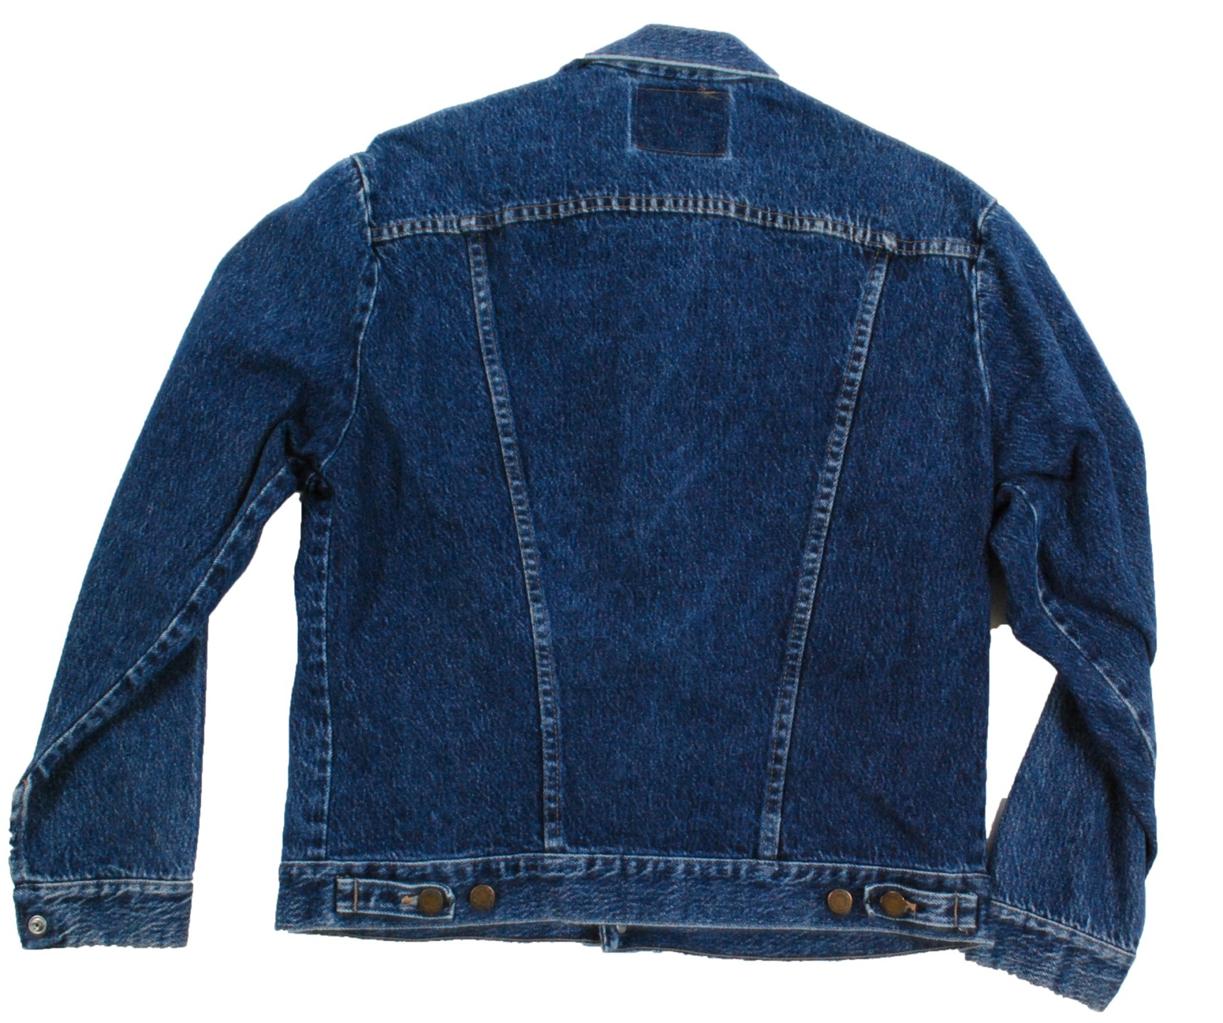 Vintage Wrangler denim jean jacket - Medium M | eBay